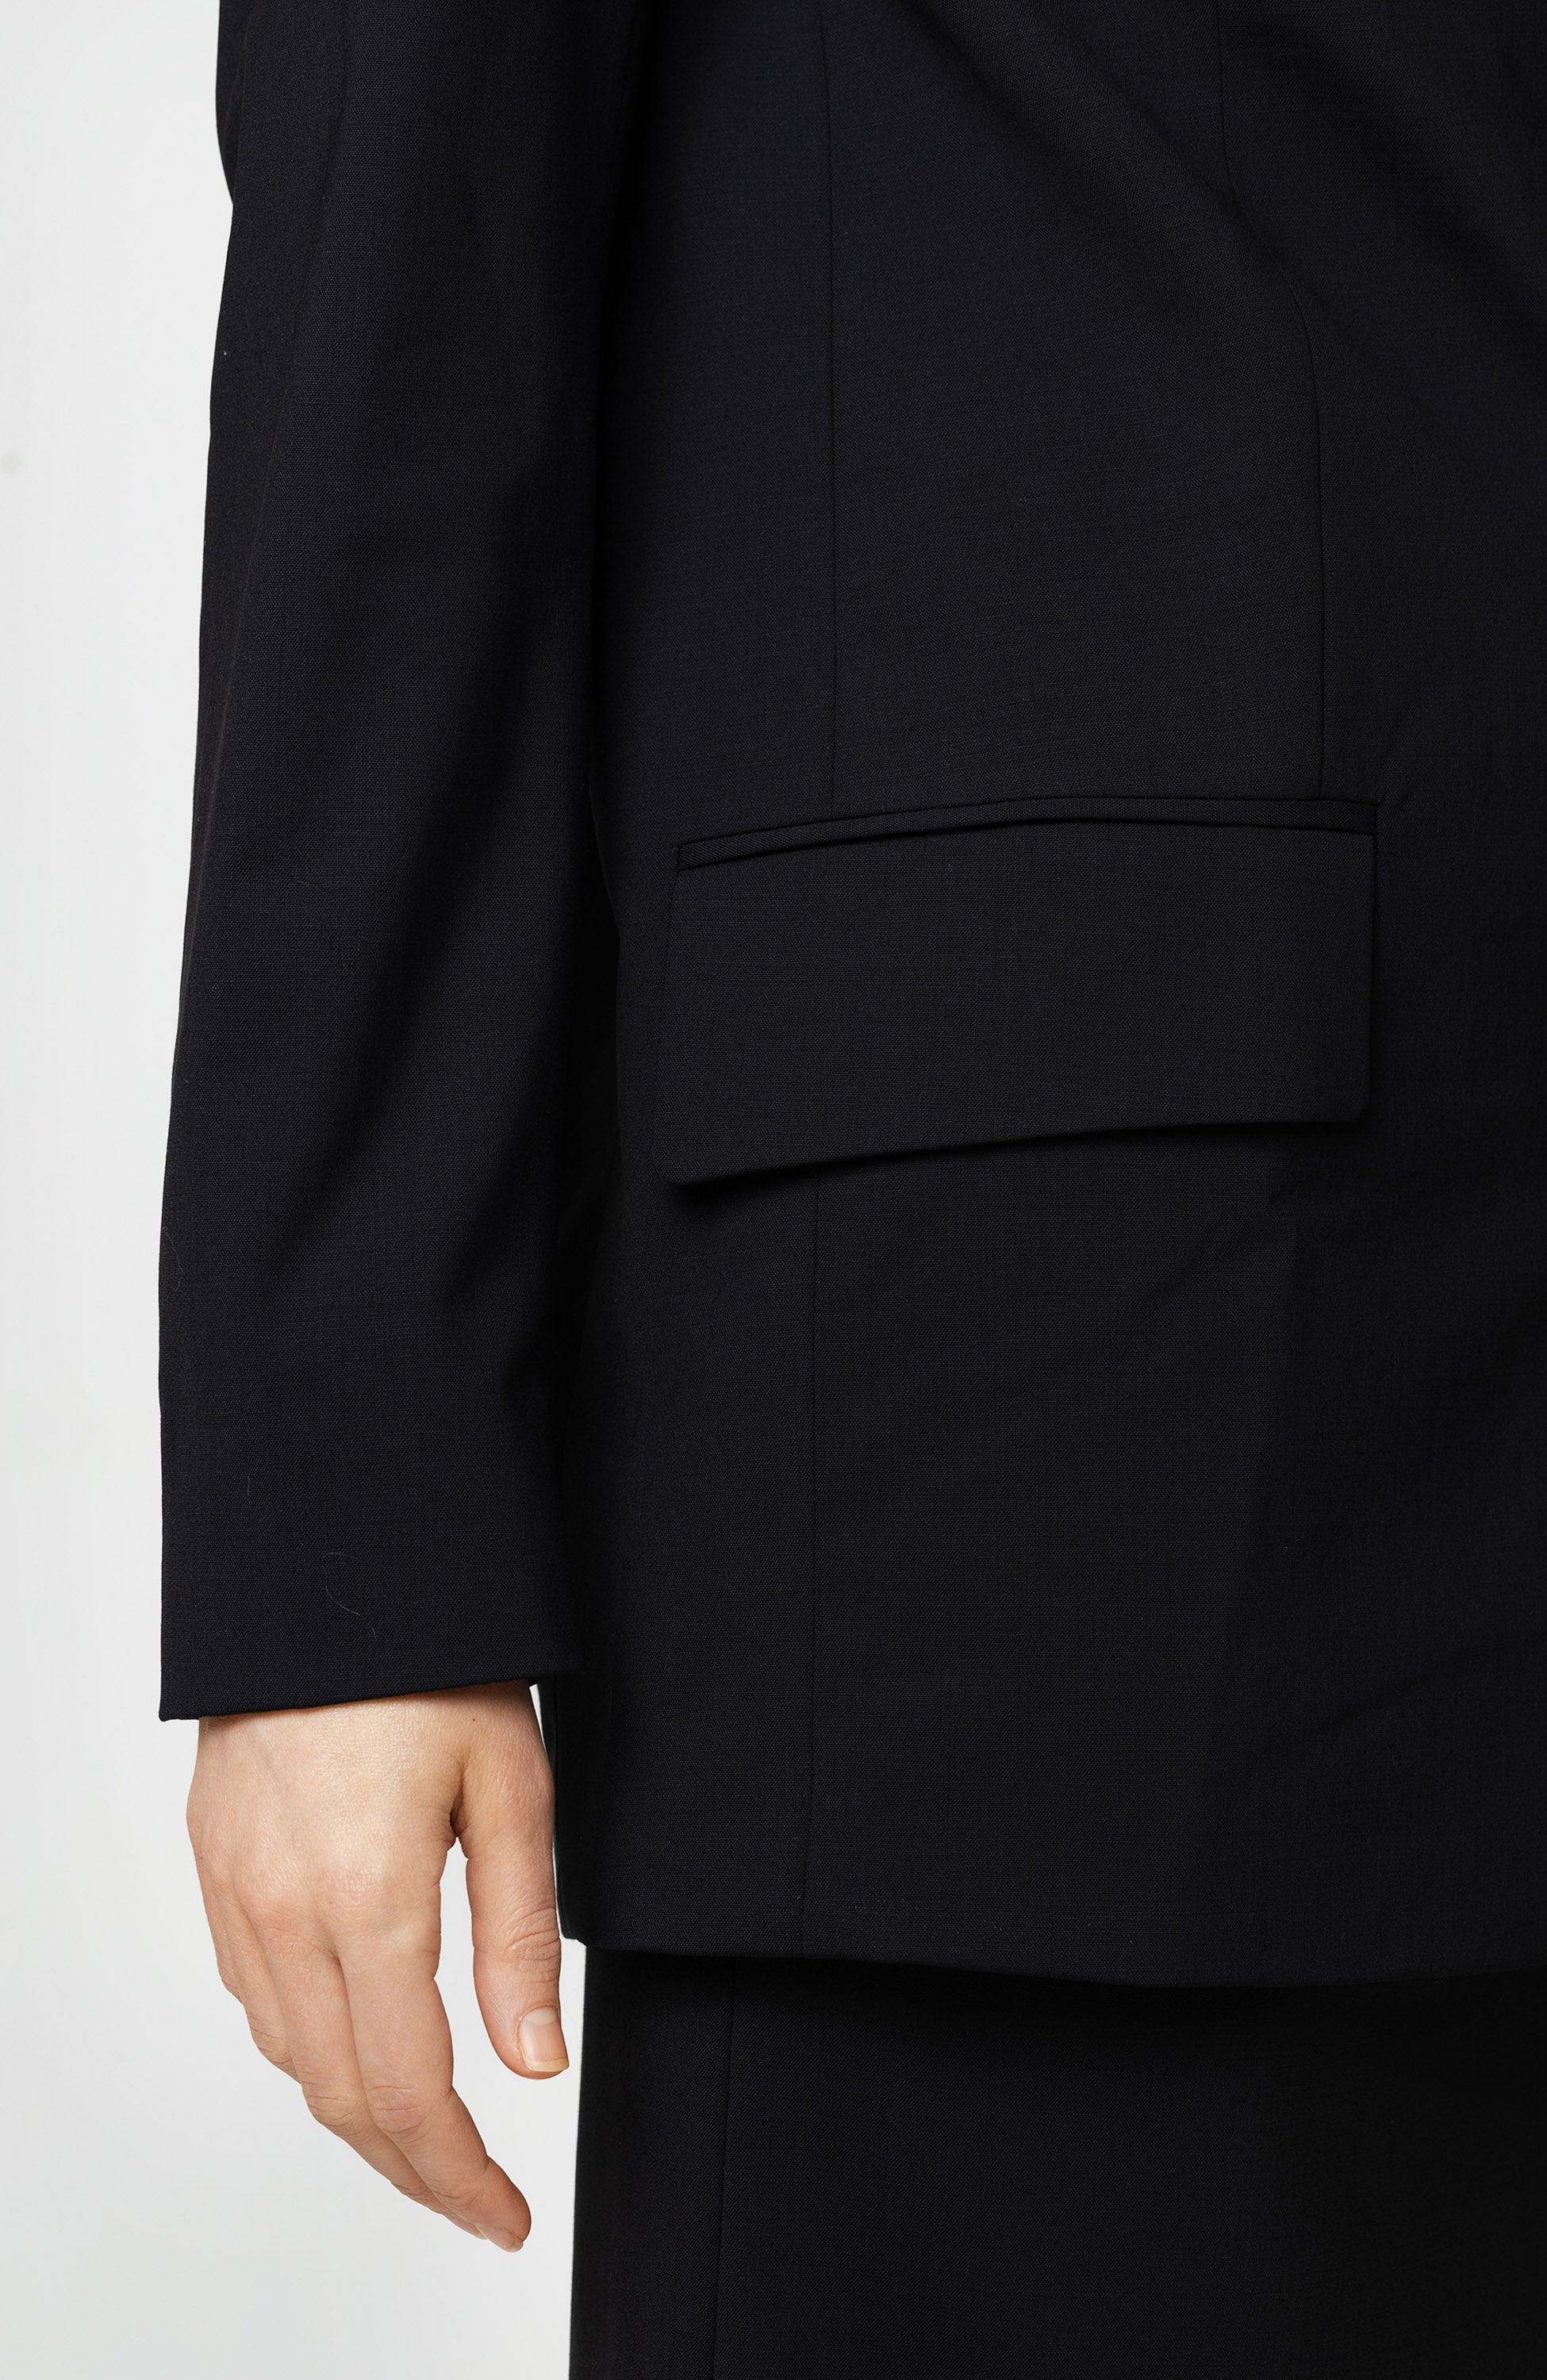 Oversize suit blazer